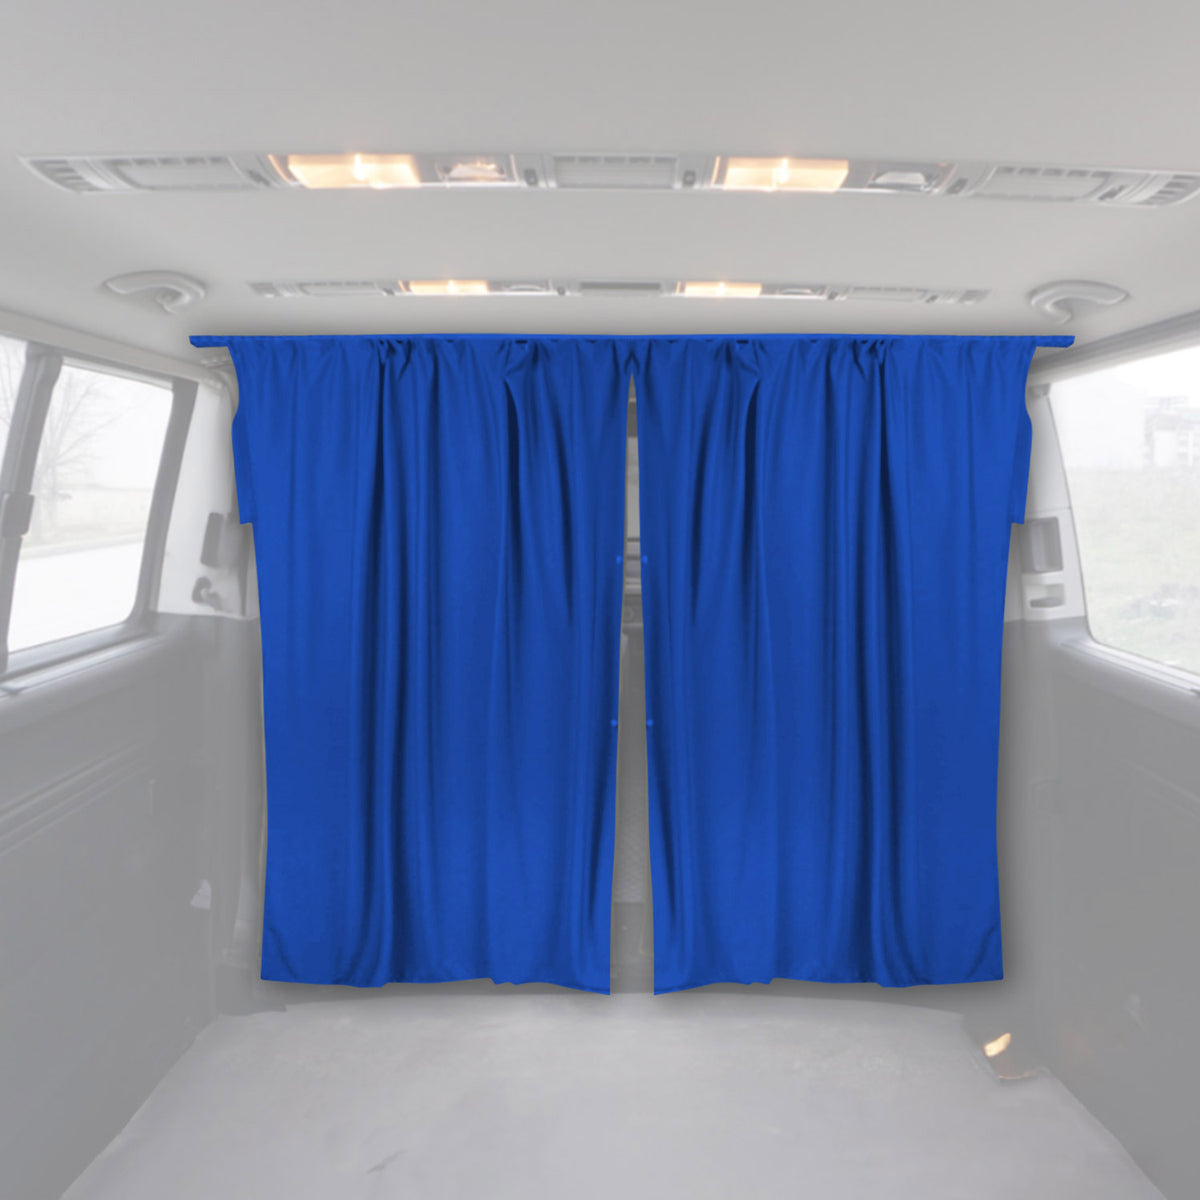 Fahrerhaus Führerhaus Gardinen Sonnenschutz für Peugeot Rifter Blau 2tlg